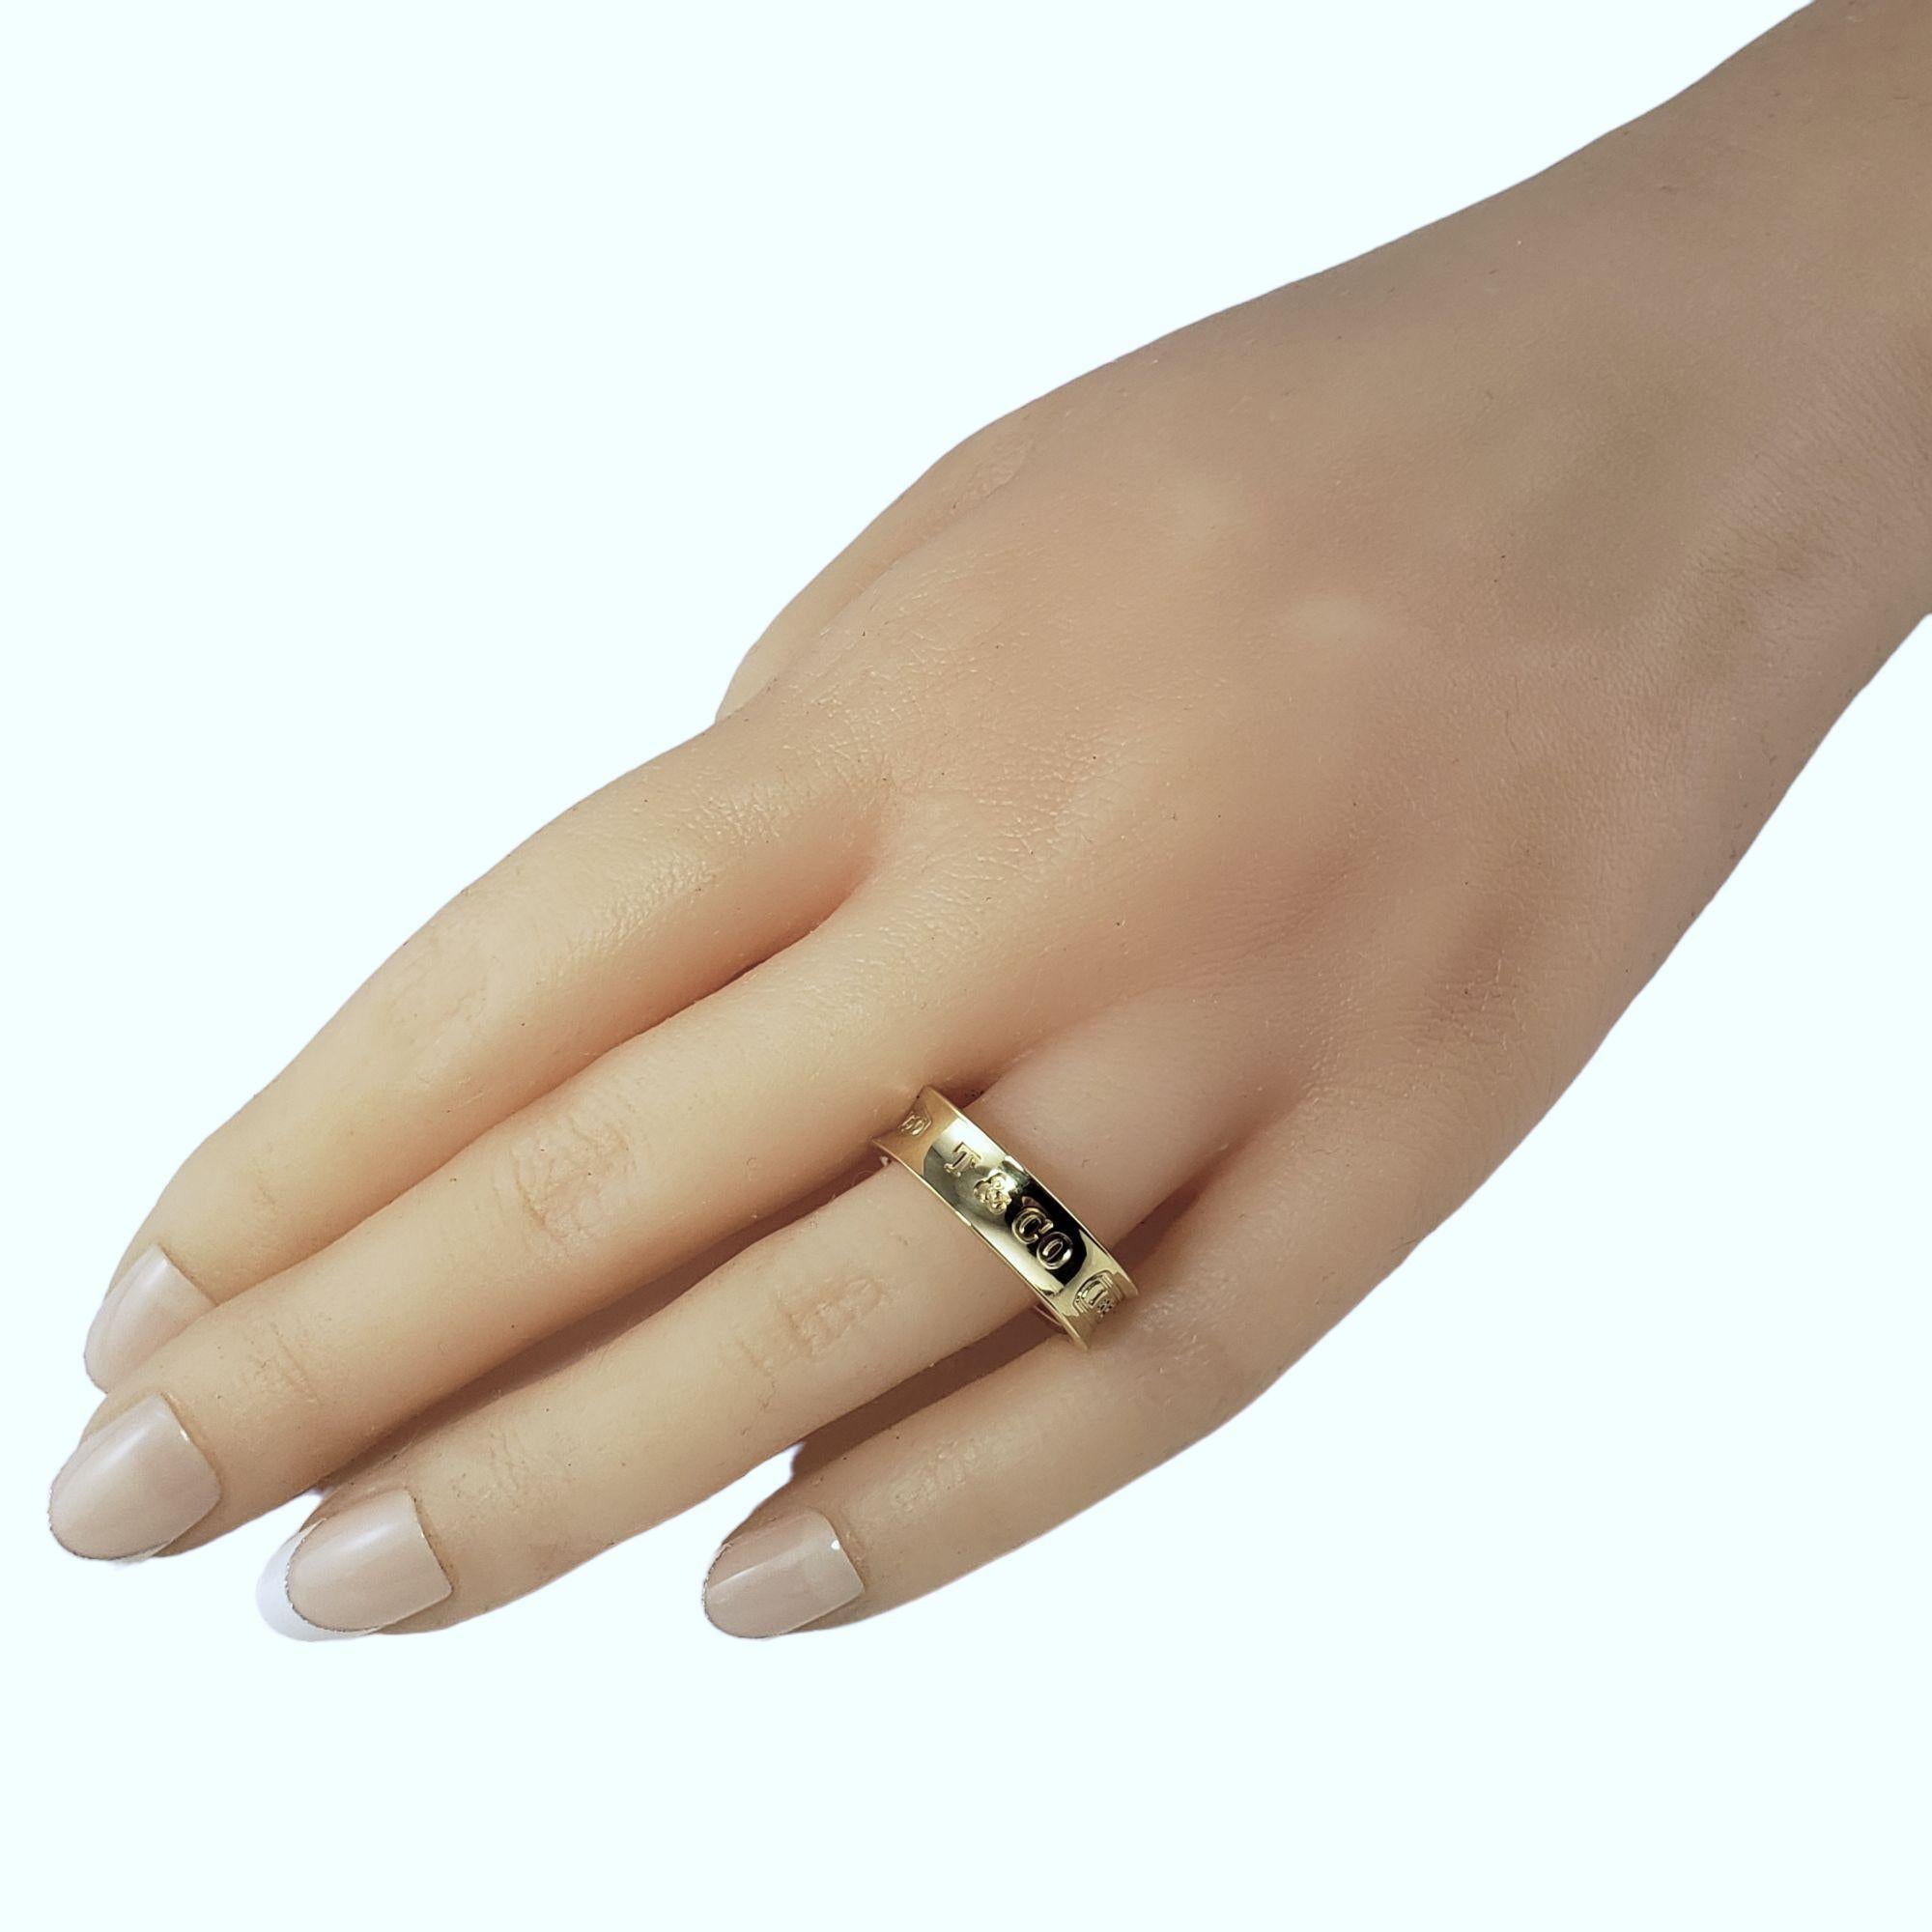  Tiffany & Co. 1837 18 Karat Yellow Gold Band Ring Size 7.5 1